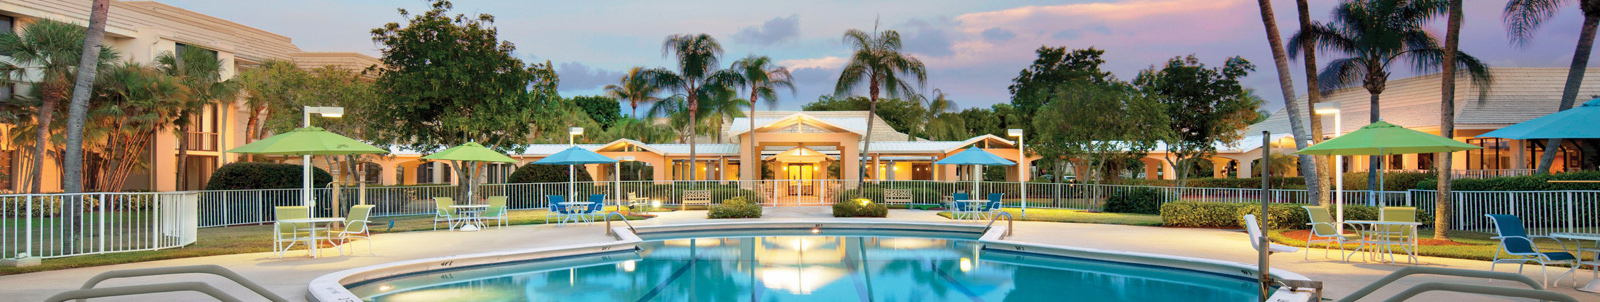 7 Tips for Choosing a Senior Apartment Rental in Florida